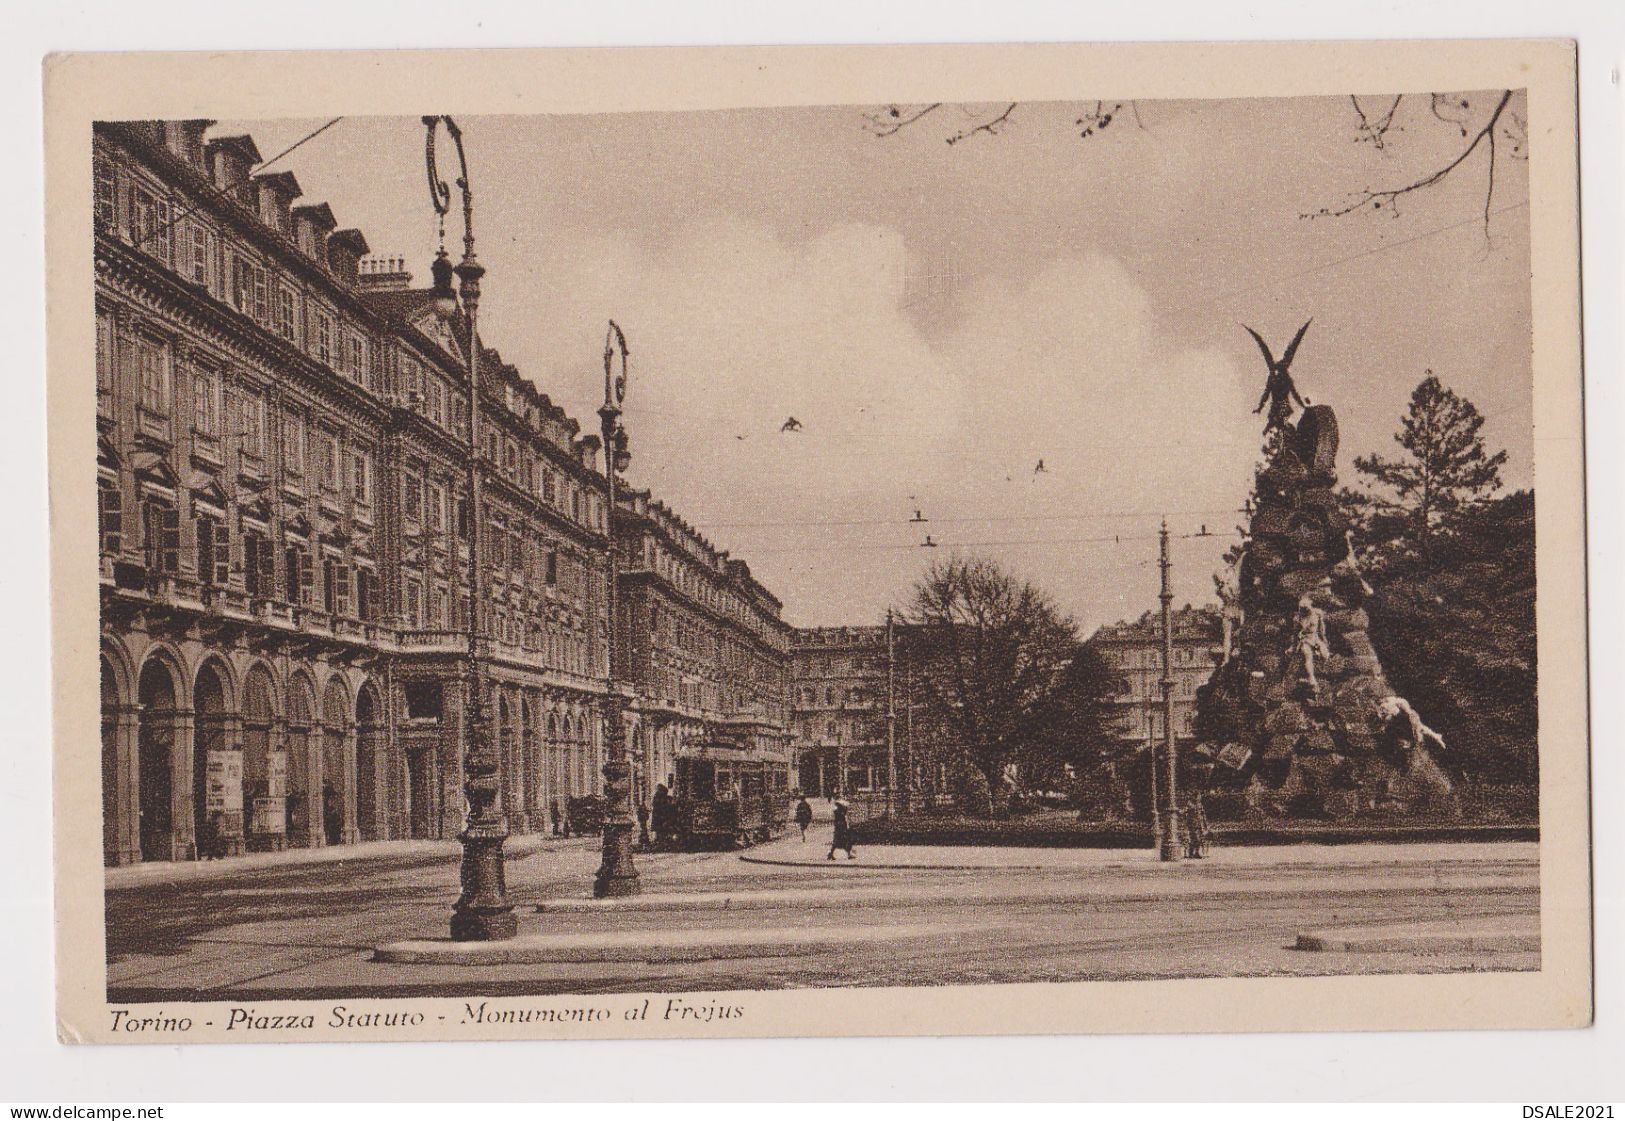 Italy Italia TORINO, Piazza Statuto-Monumento Al Frejus, Buildings, Electric Tram, View Vintage Photo Postcard (66779) - Transport